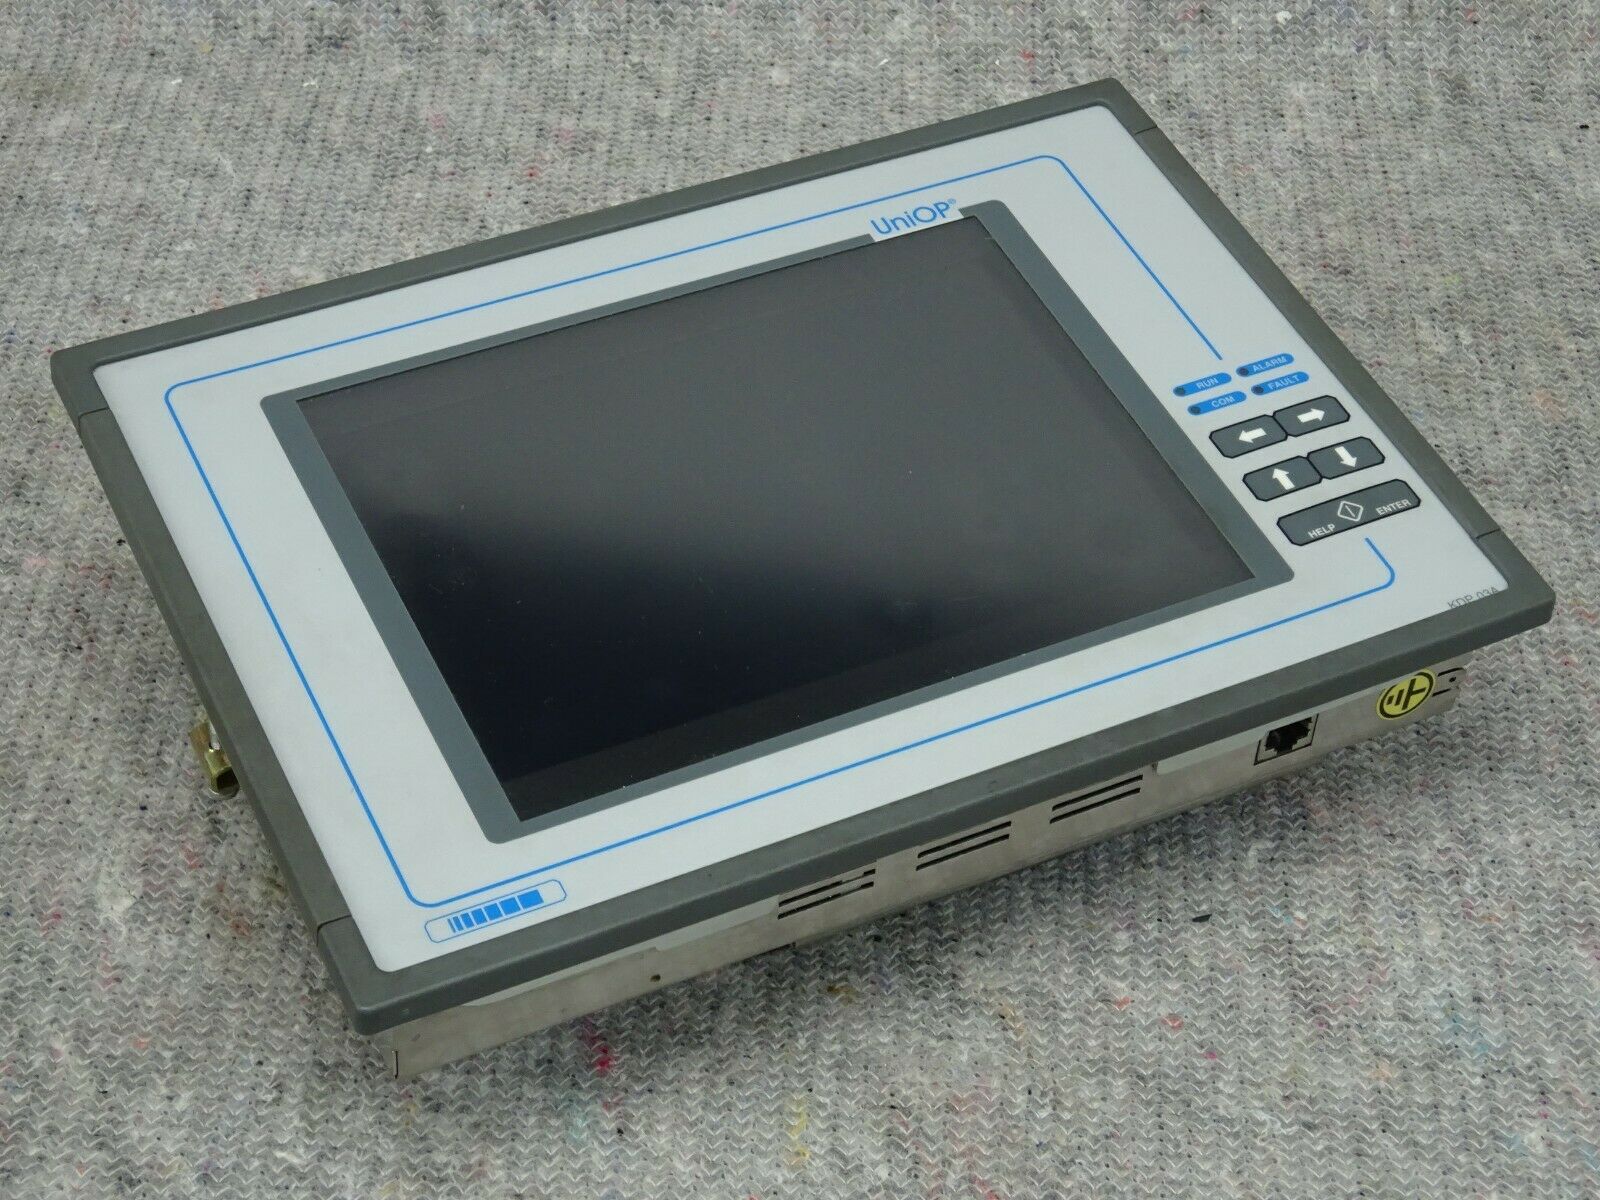  ER-VGA-0045 UNIOP触摸屏维修